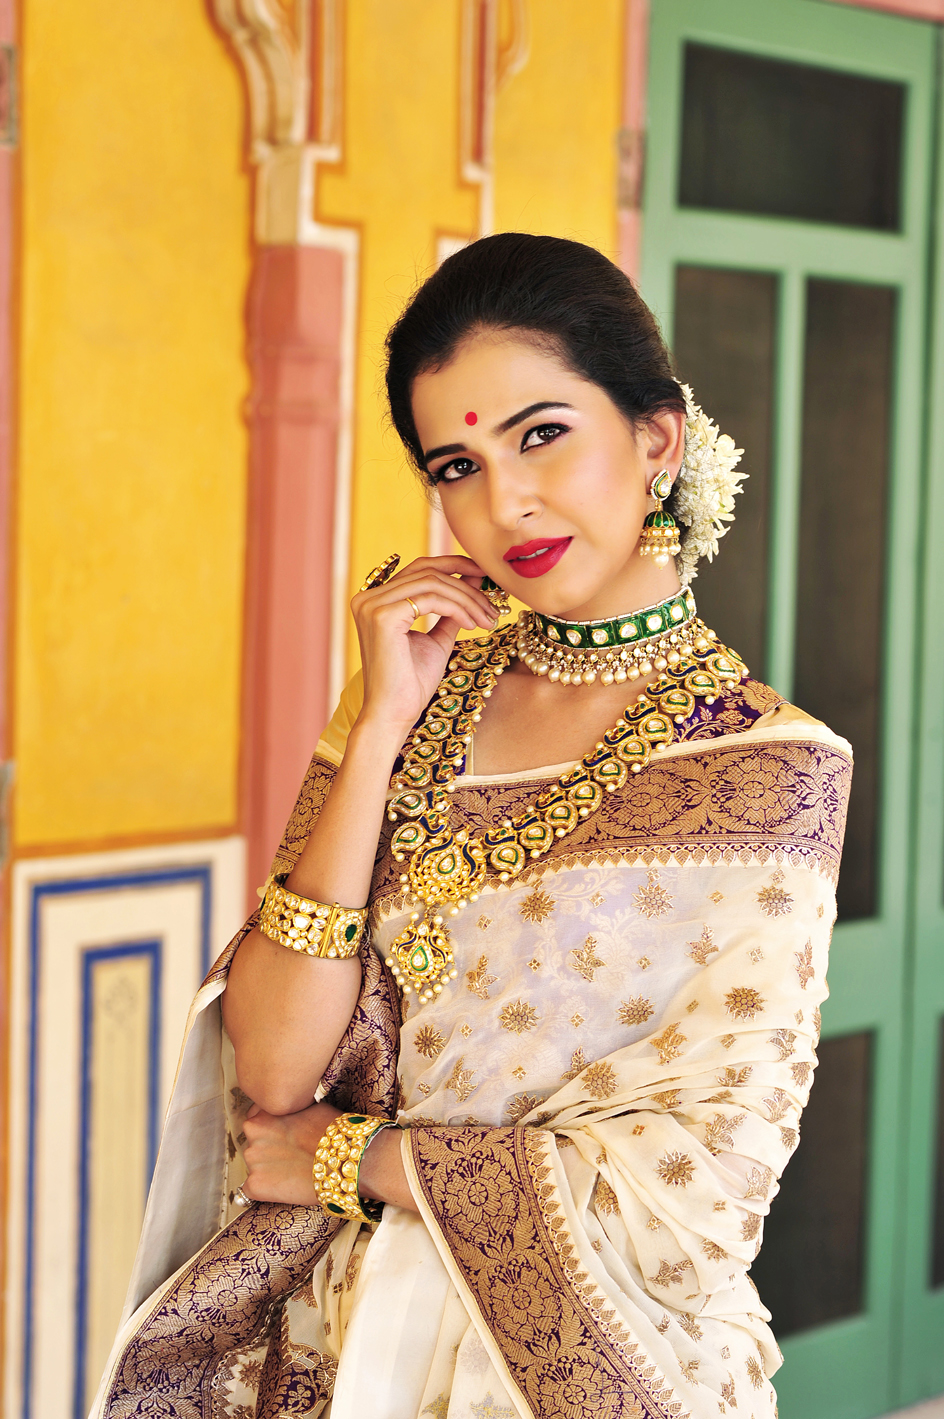 Celebrating Vivaha, Anand Ranawat, Bridal Jewellery, Wedding Trends